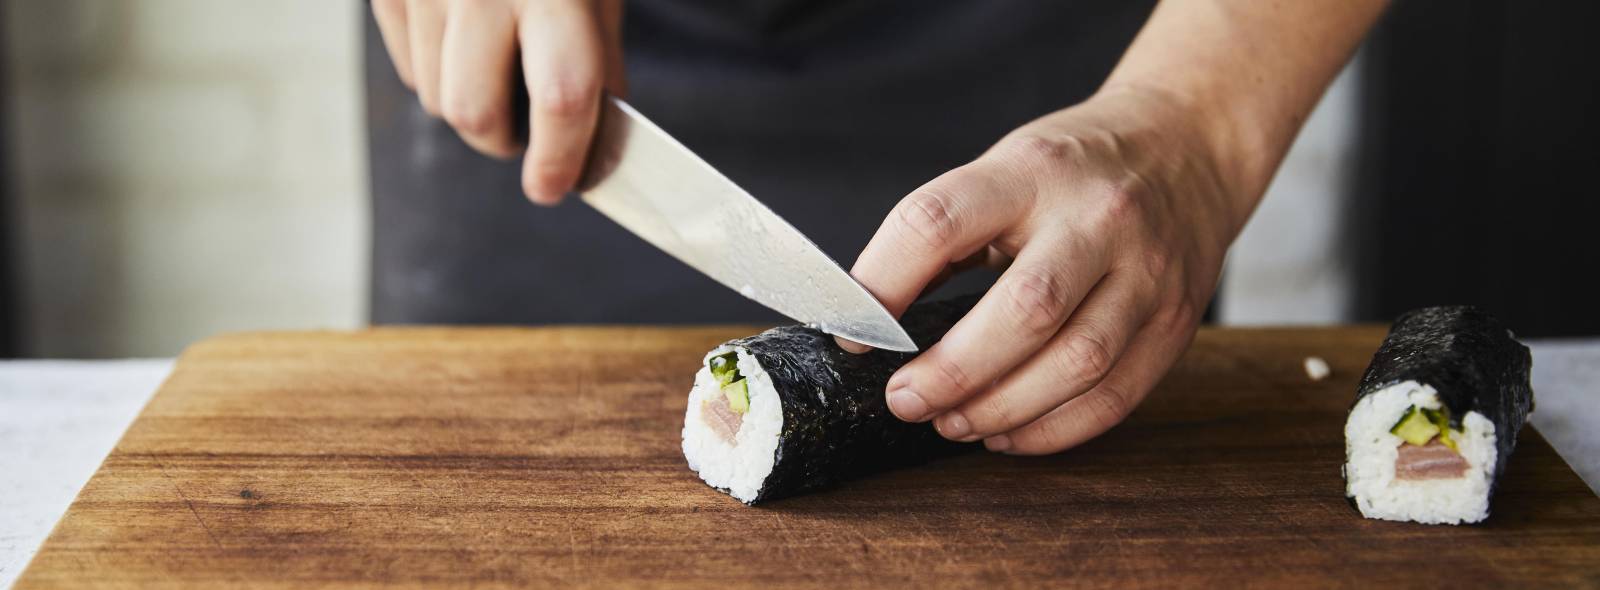 GRA Sushi masterclass Slicing maki sushi rice seaweed 030821 3 yynihf